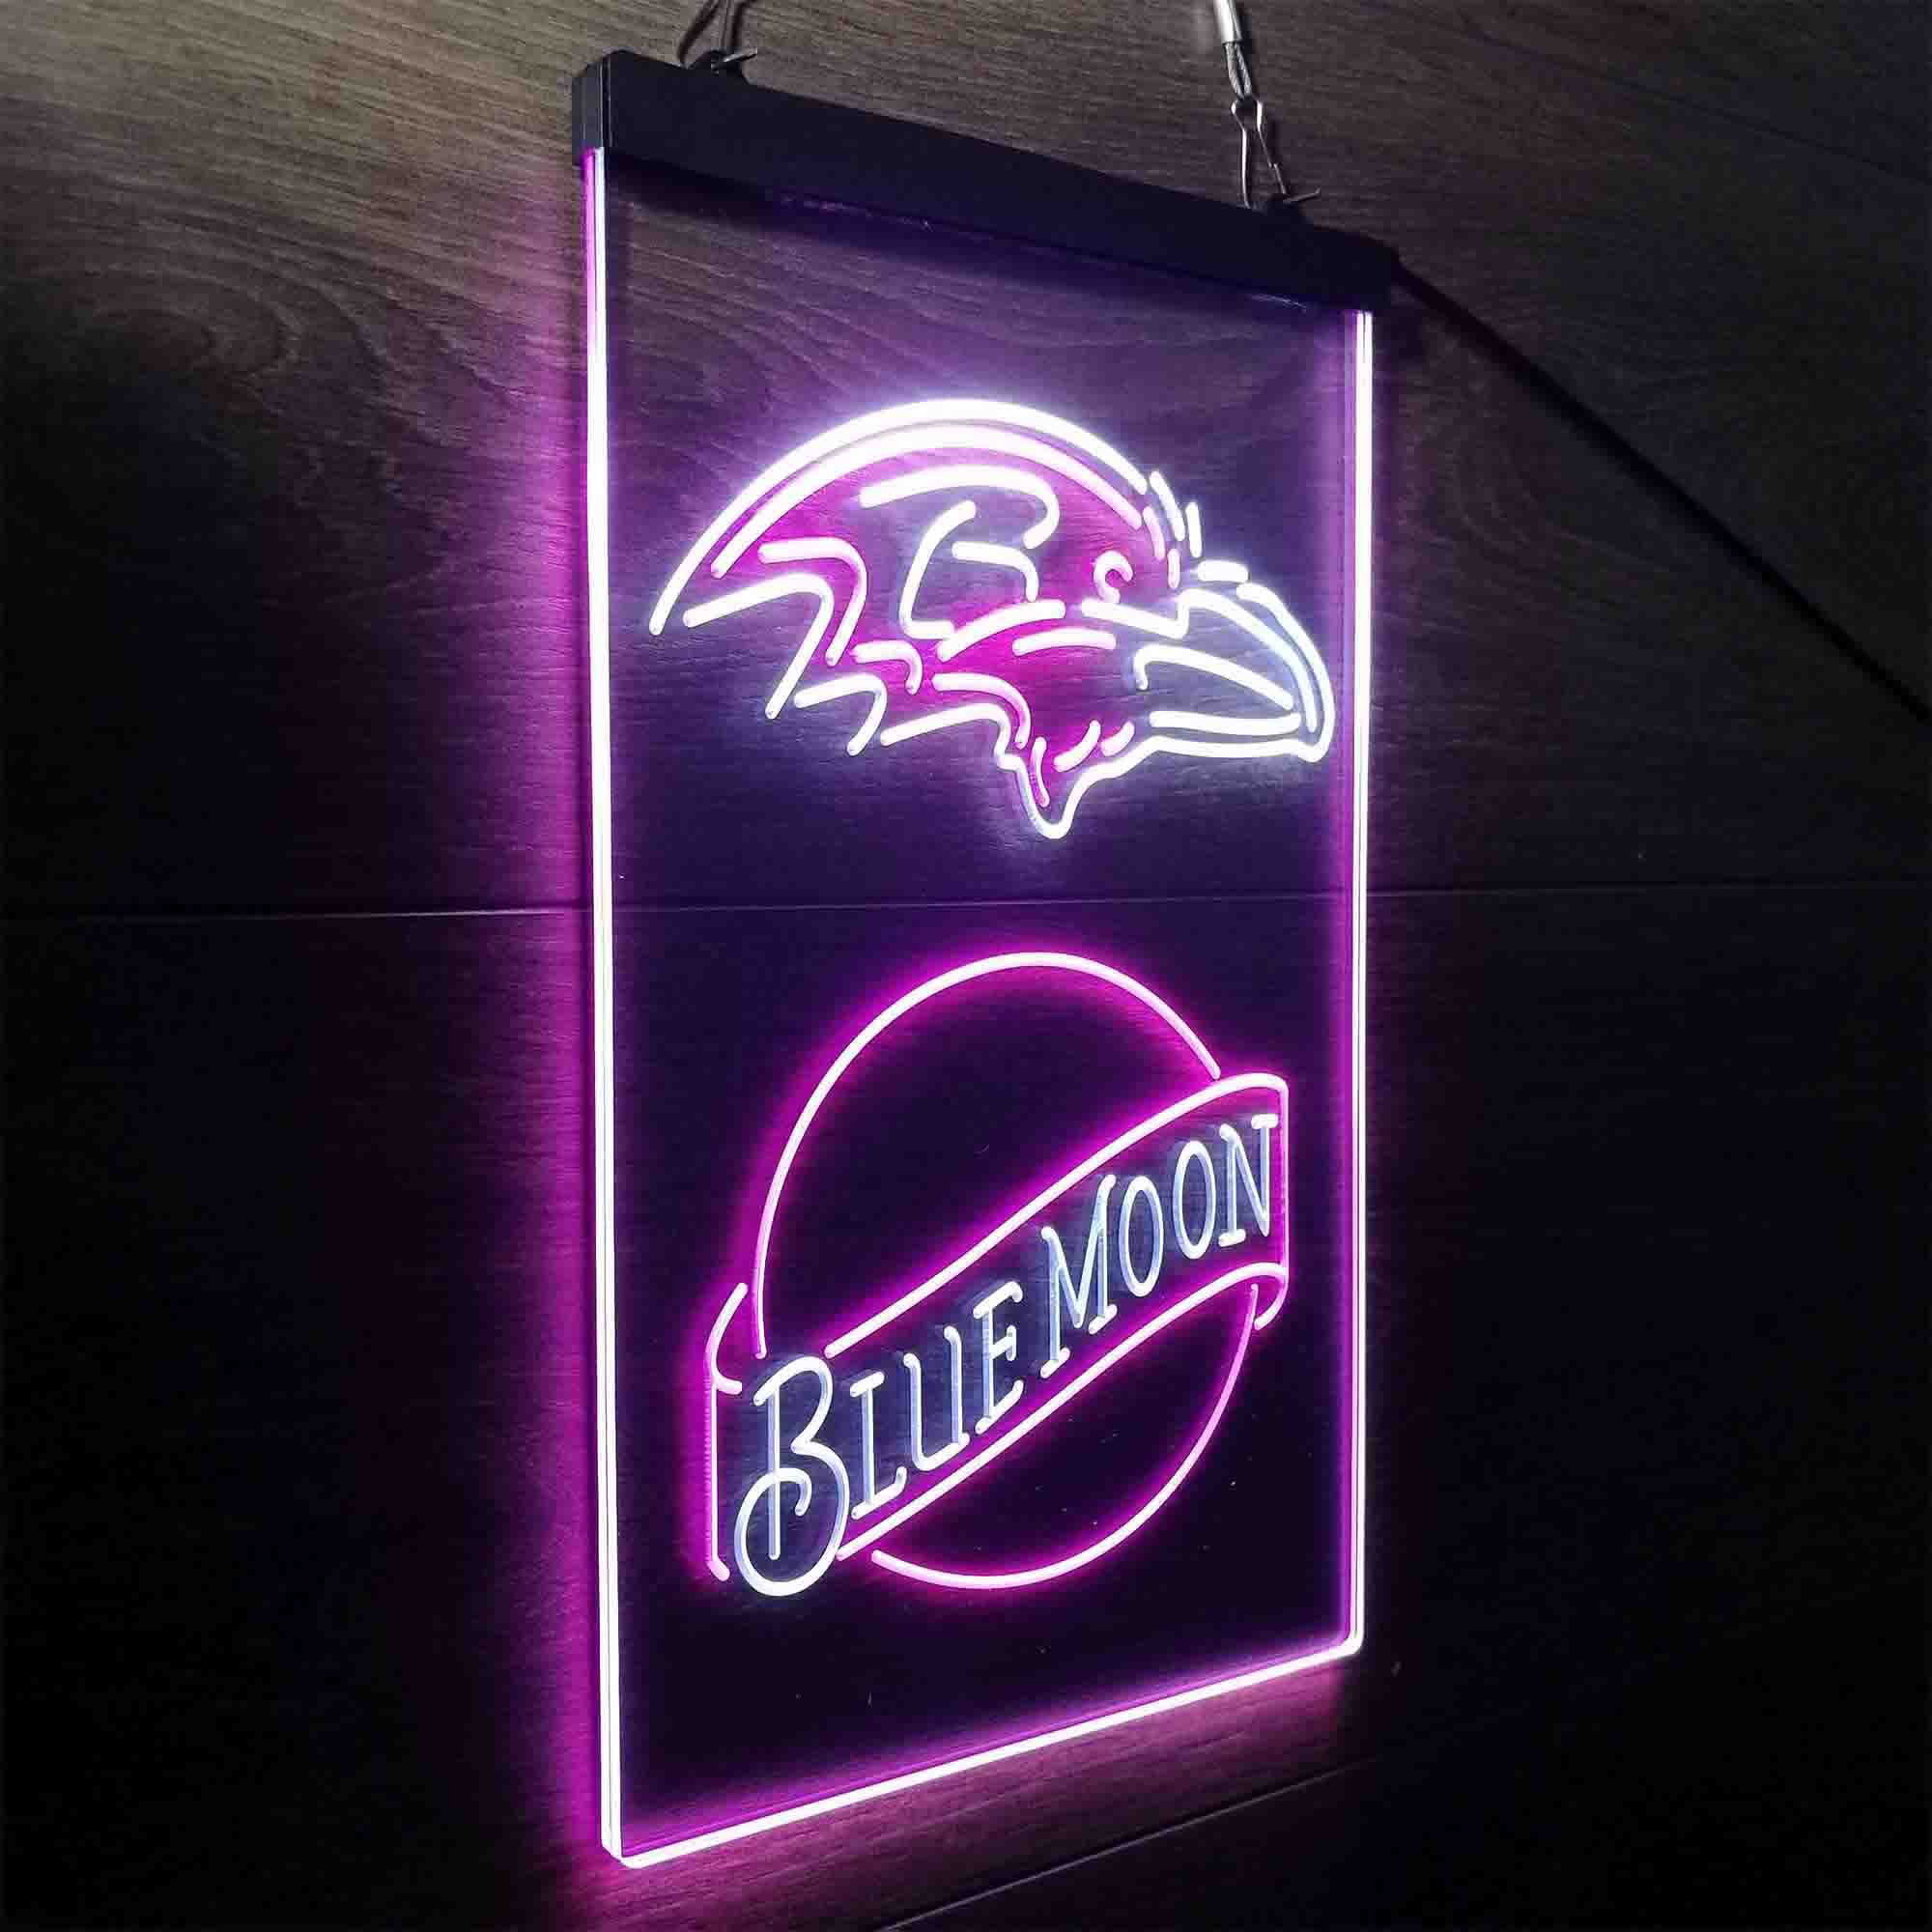 Blue Moon Bar Baltimore Ravens Est. 1996 LED Neon Sign